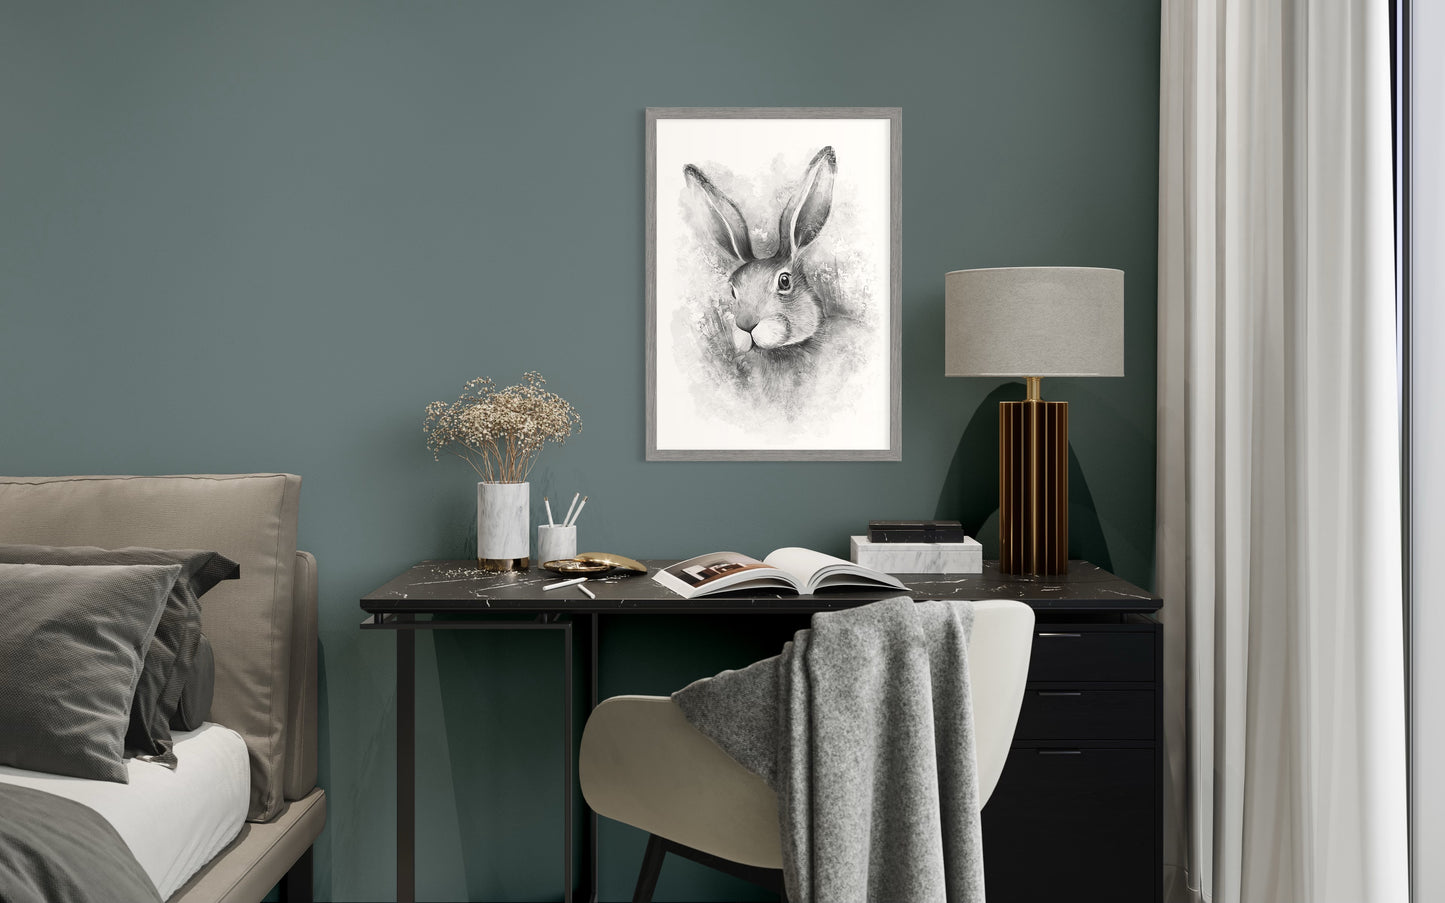 Hare Art Print, Wall Decor Poster